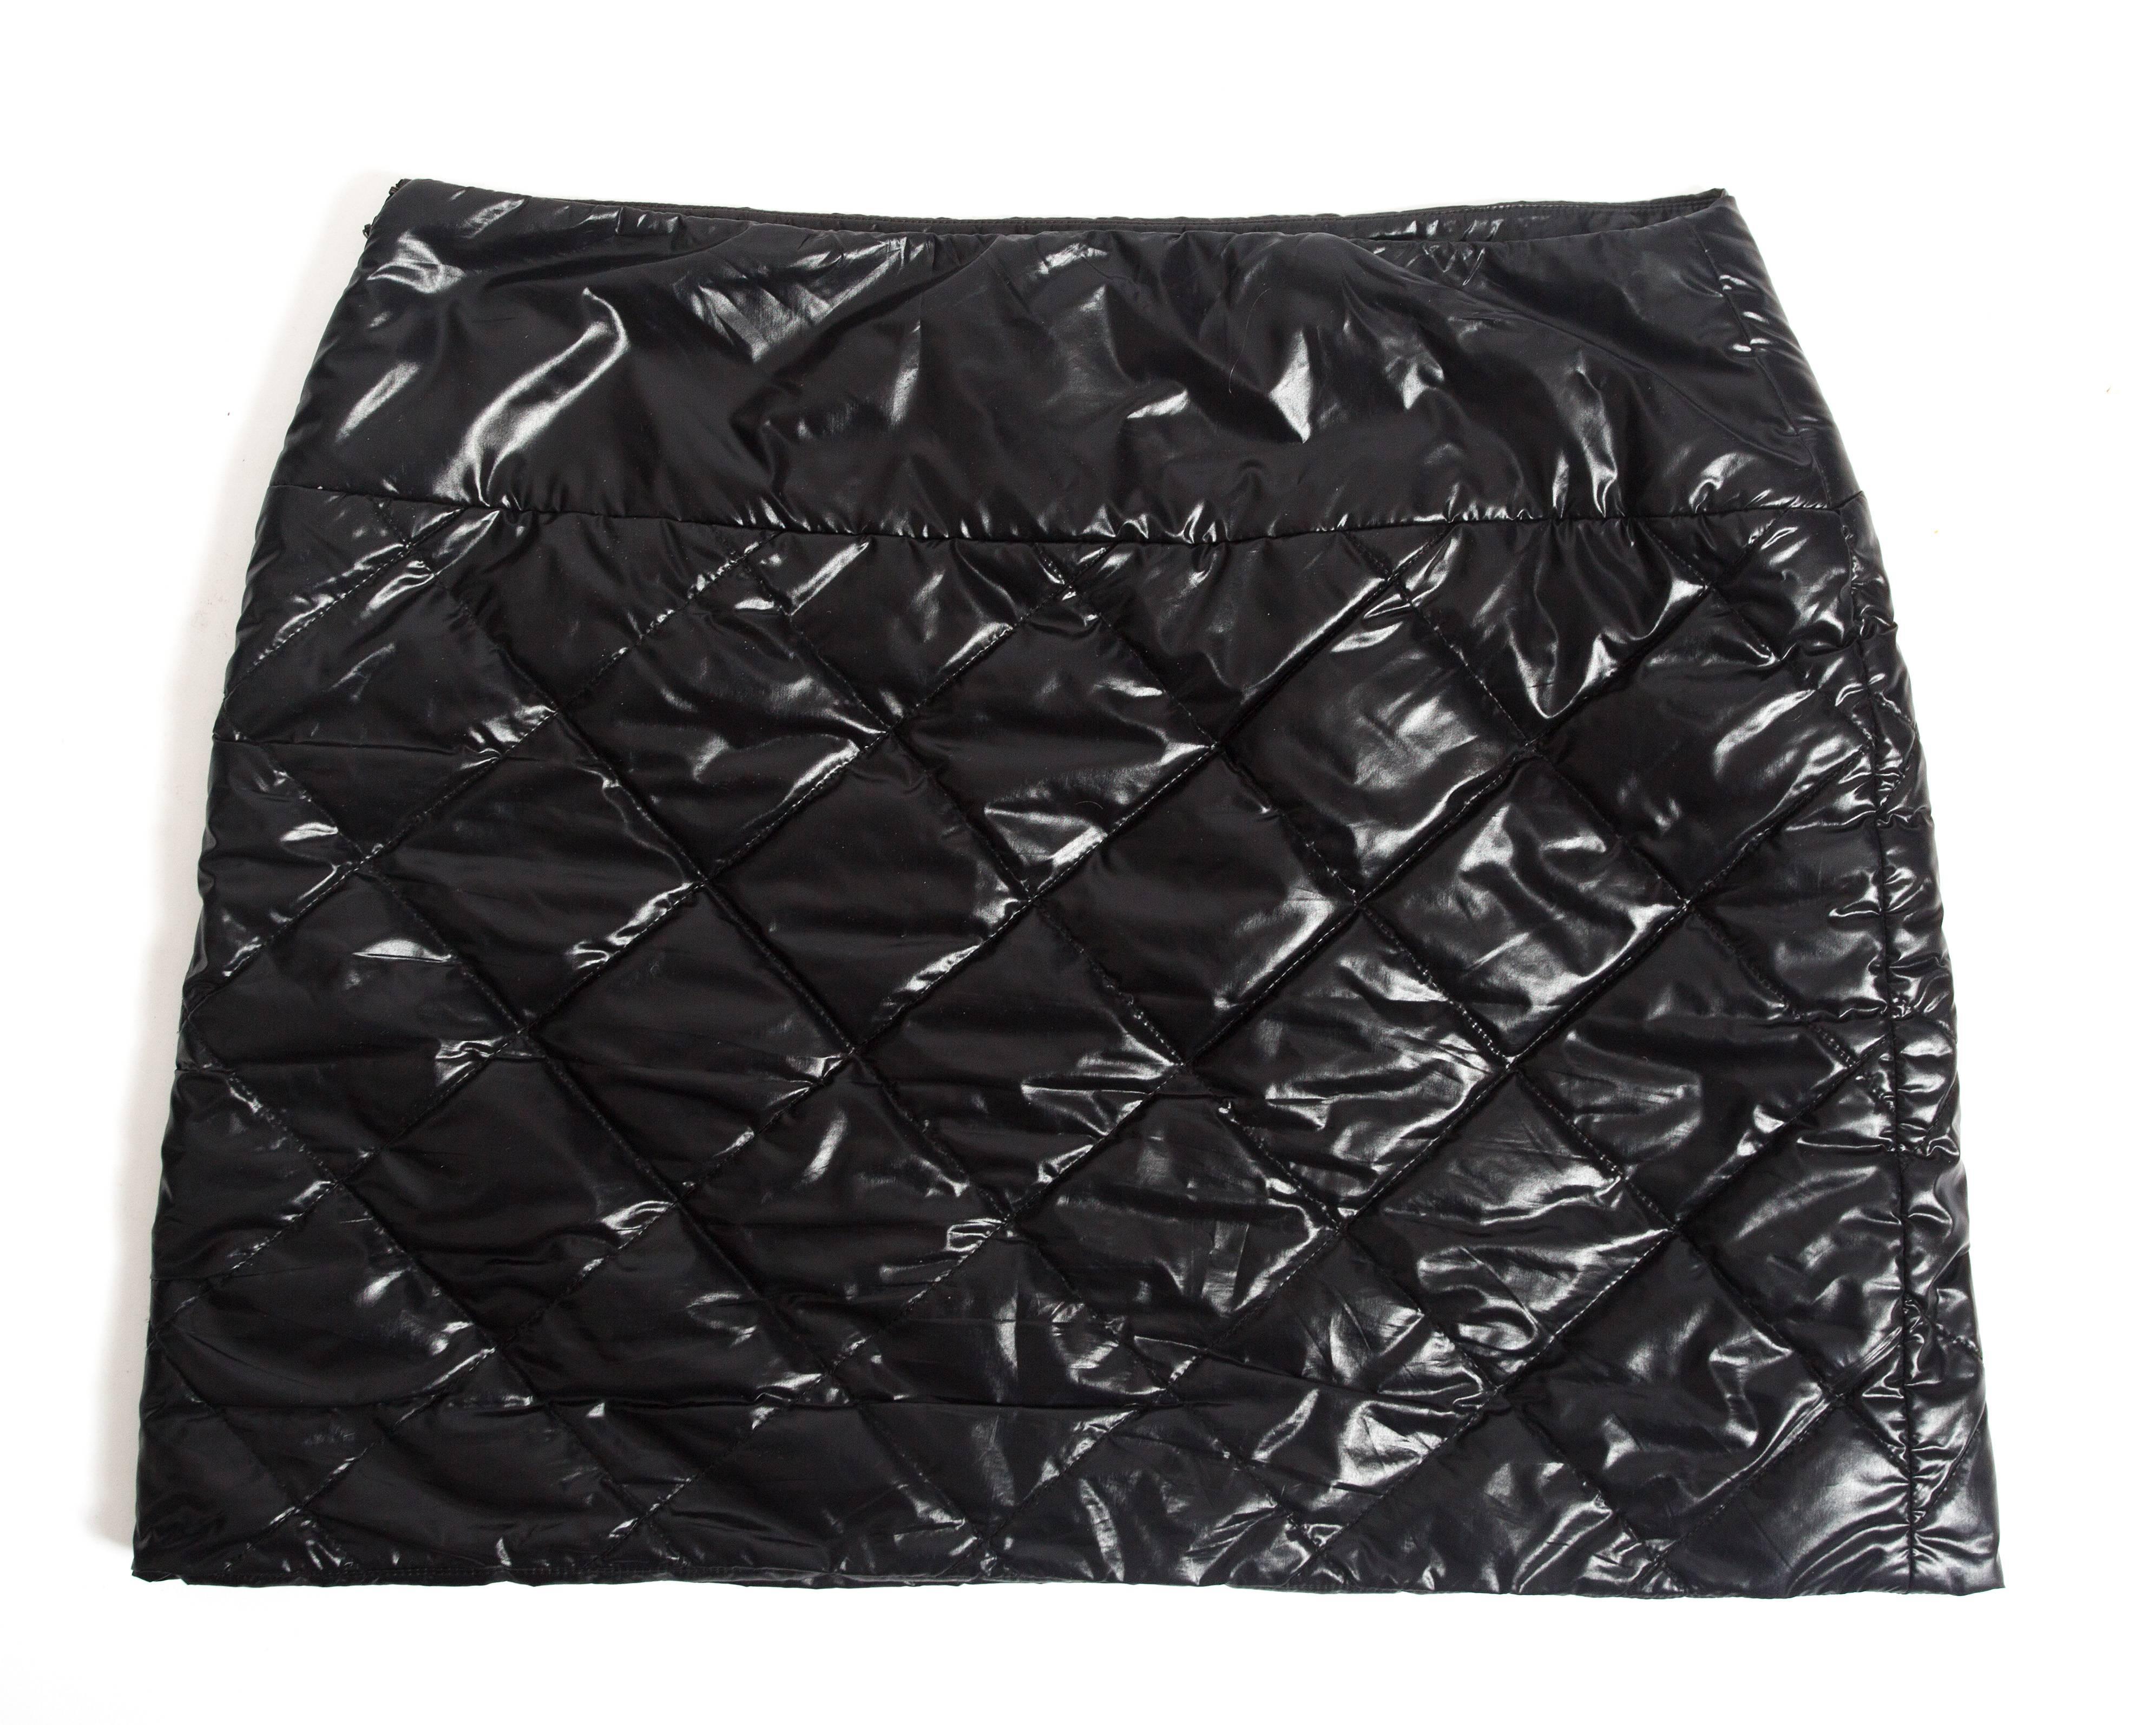 Black Chanel quilted nylon mini skirt, circa 2006